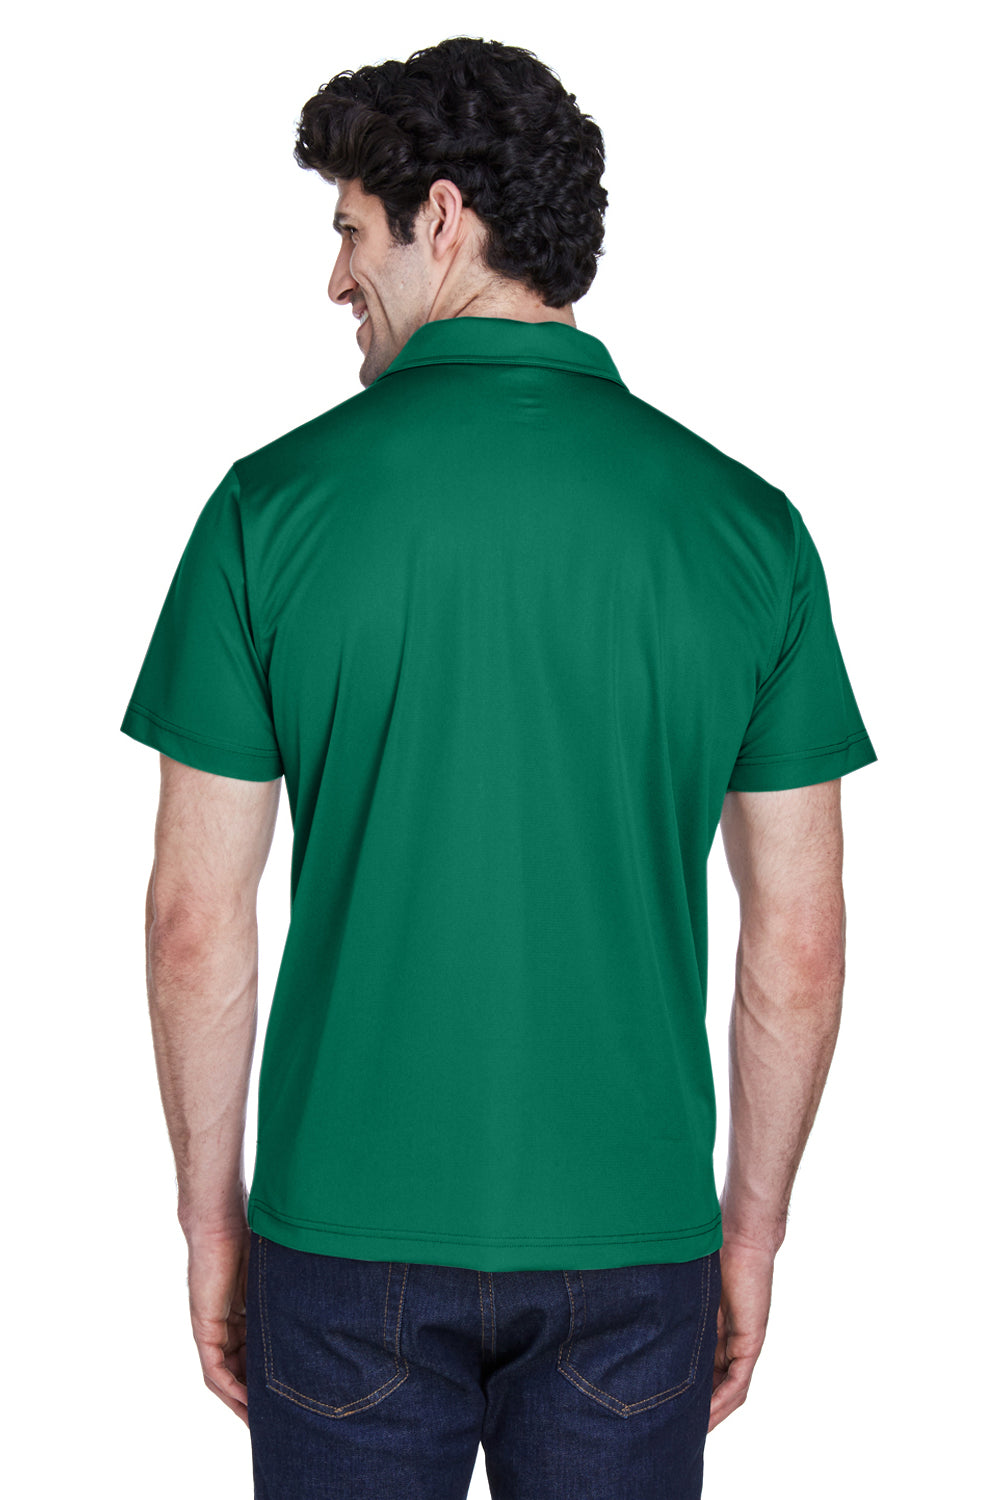 Team 365 TT21 Mens Command Performance Moisture Wicking Short Sleeve Polo Shirt Forest Green Back